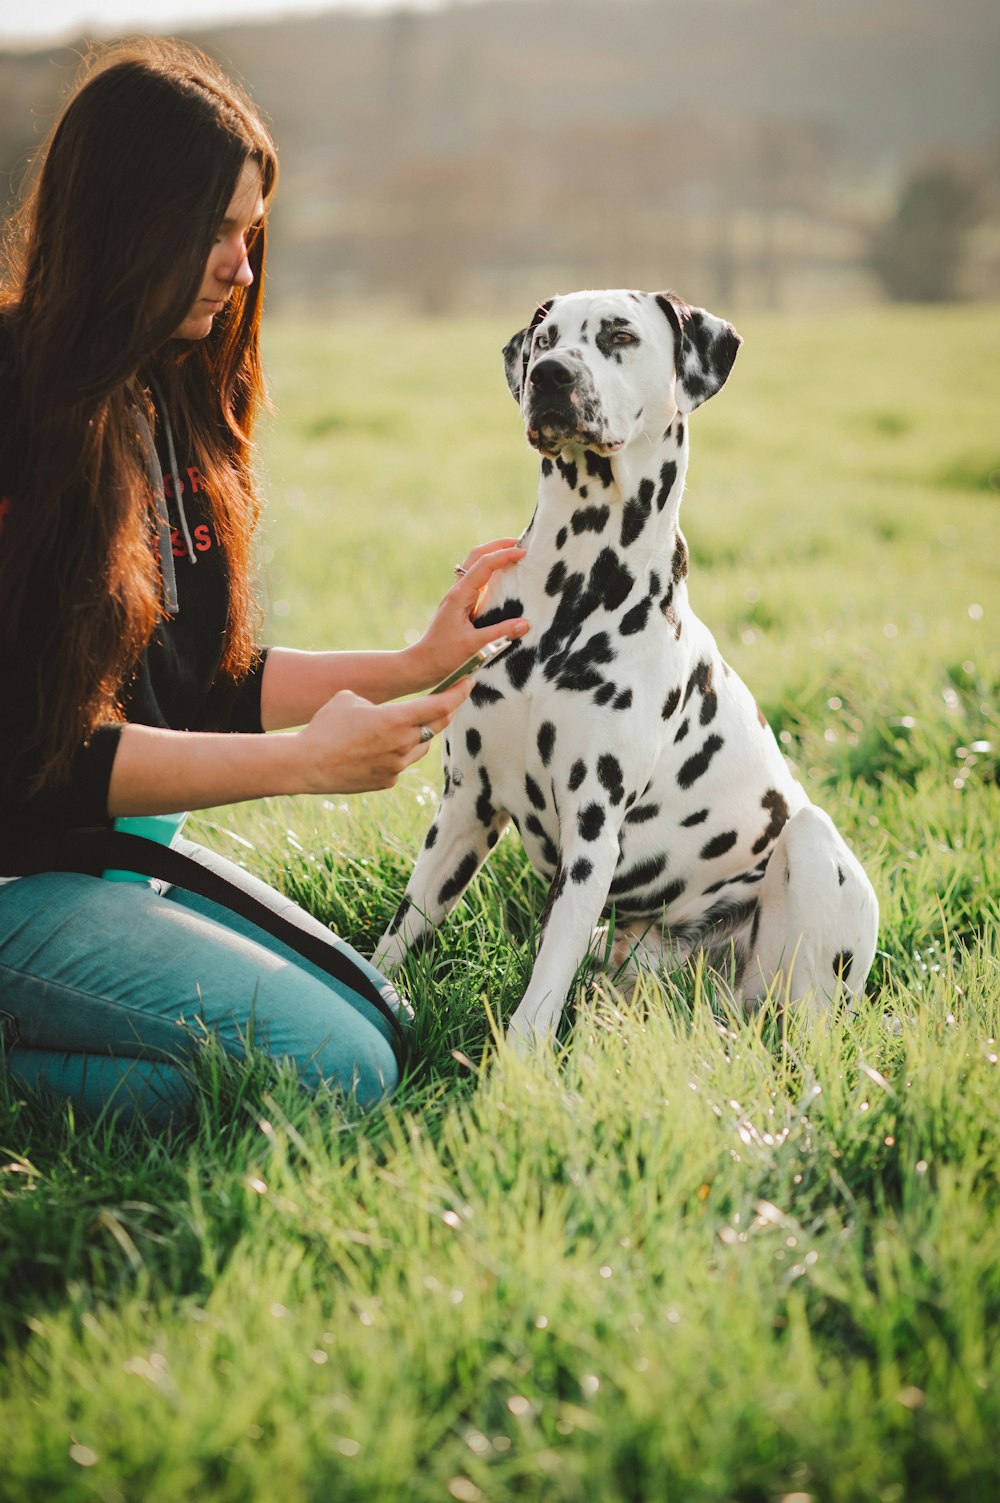 a woman petting a dalmatian dog in a field